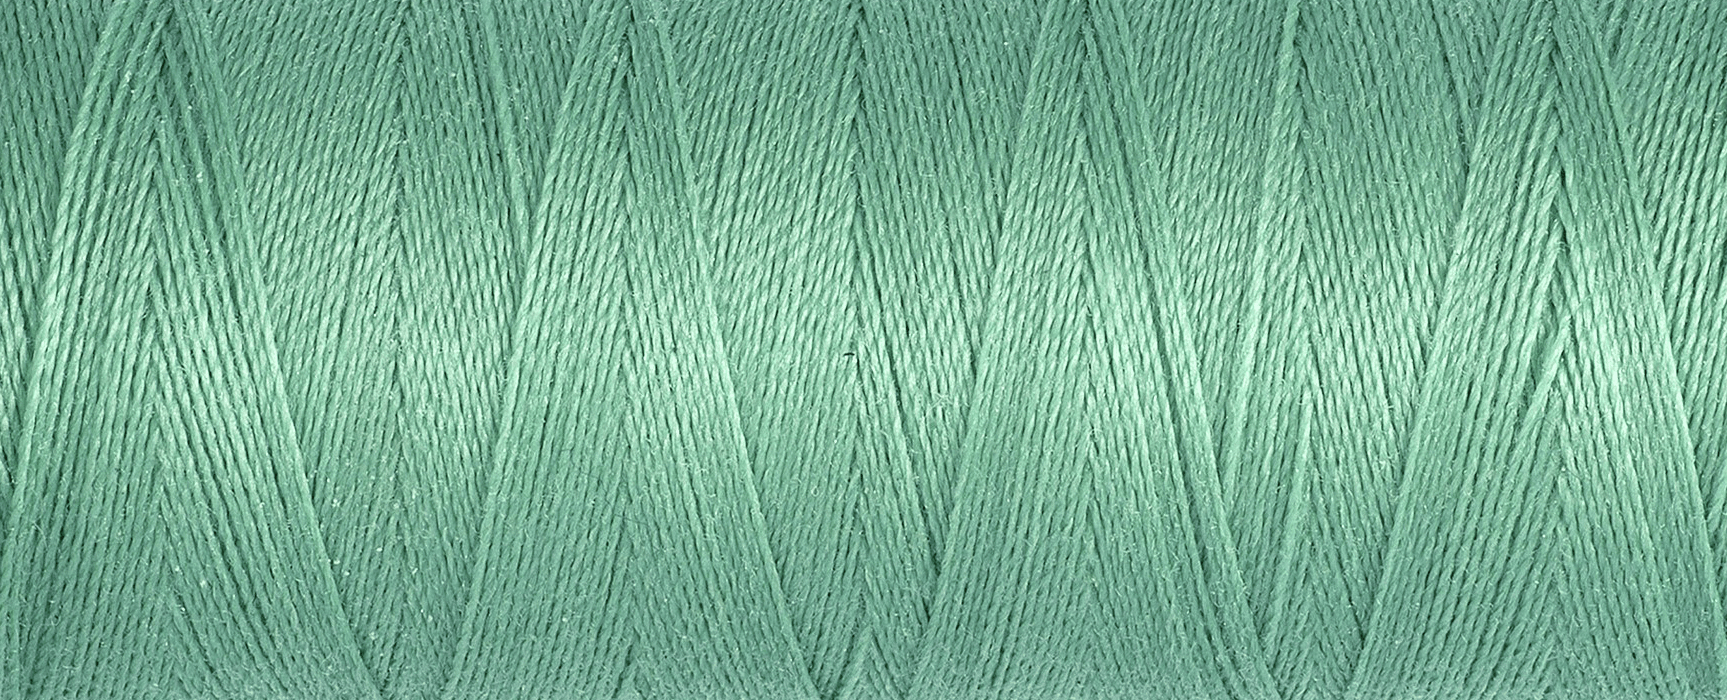 Gutermann Sew-All Thread - 100M (100)-Thread-Jelly Fabrics